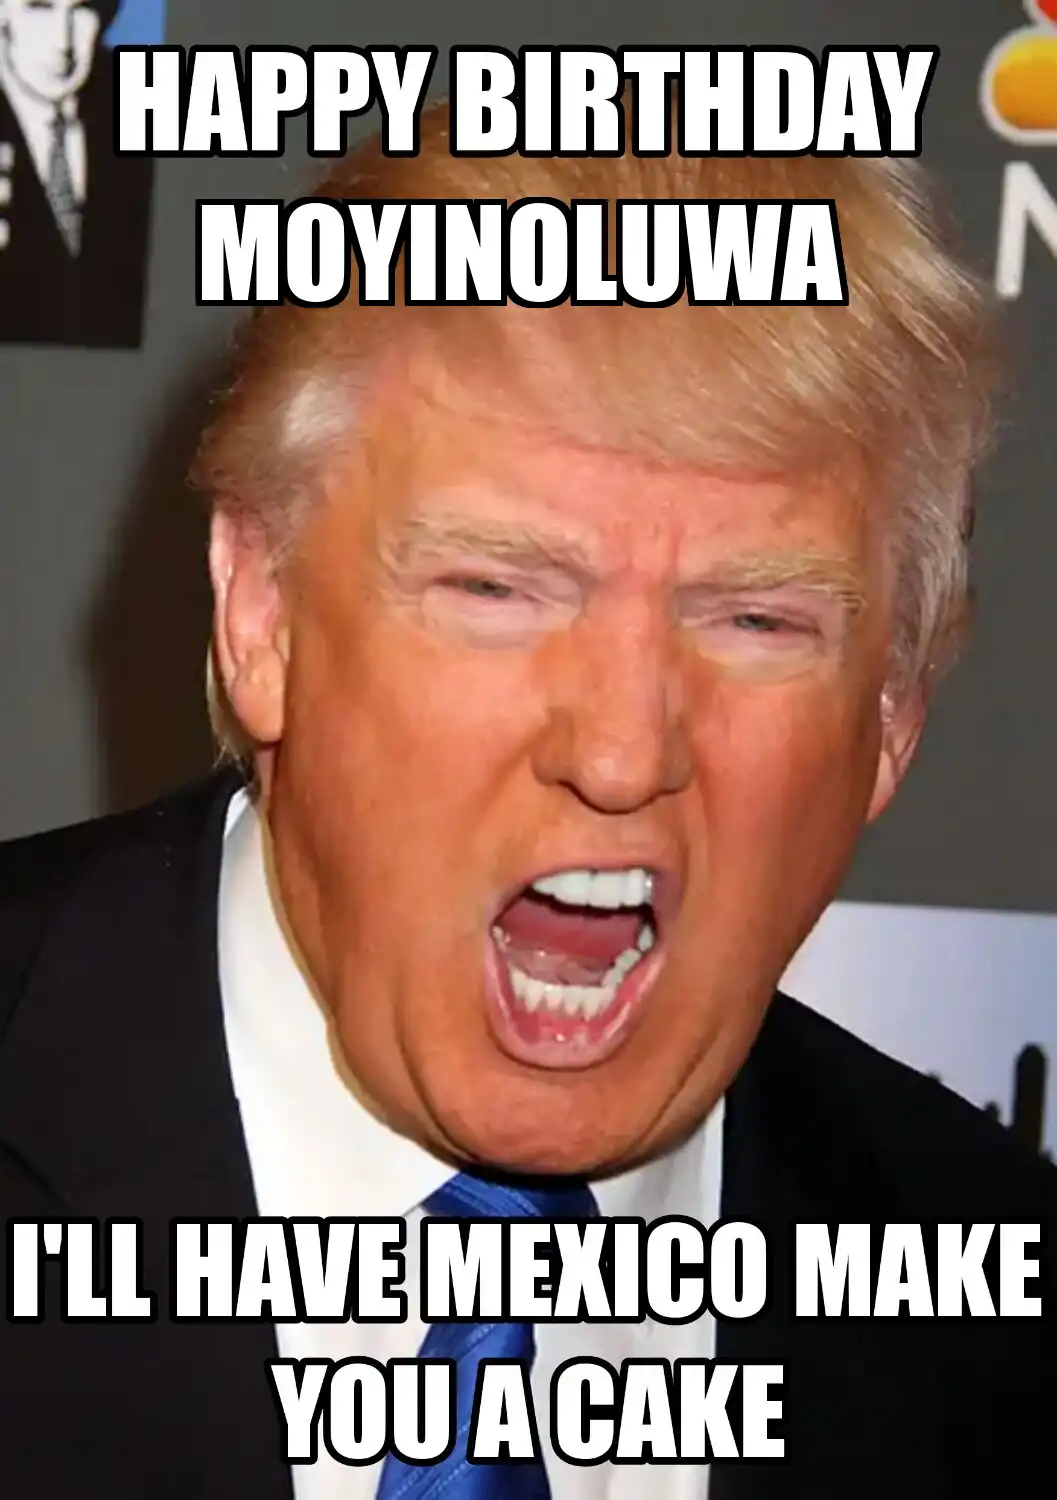 Happy Birthday Moyinoluwa Mexico Make You A Cake Meme